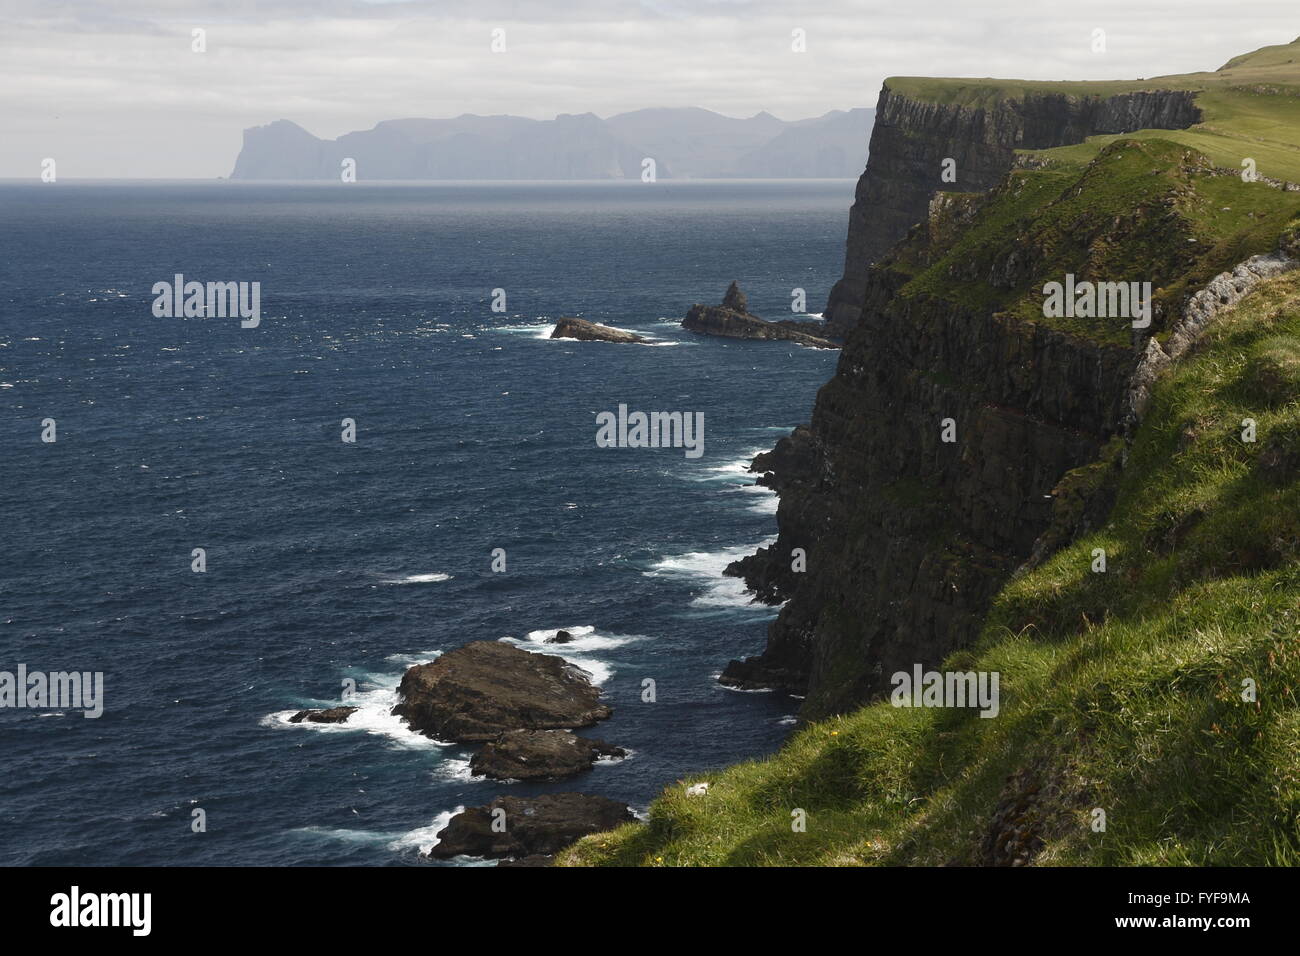 Cliff of the Mykines island Stock Photo